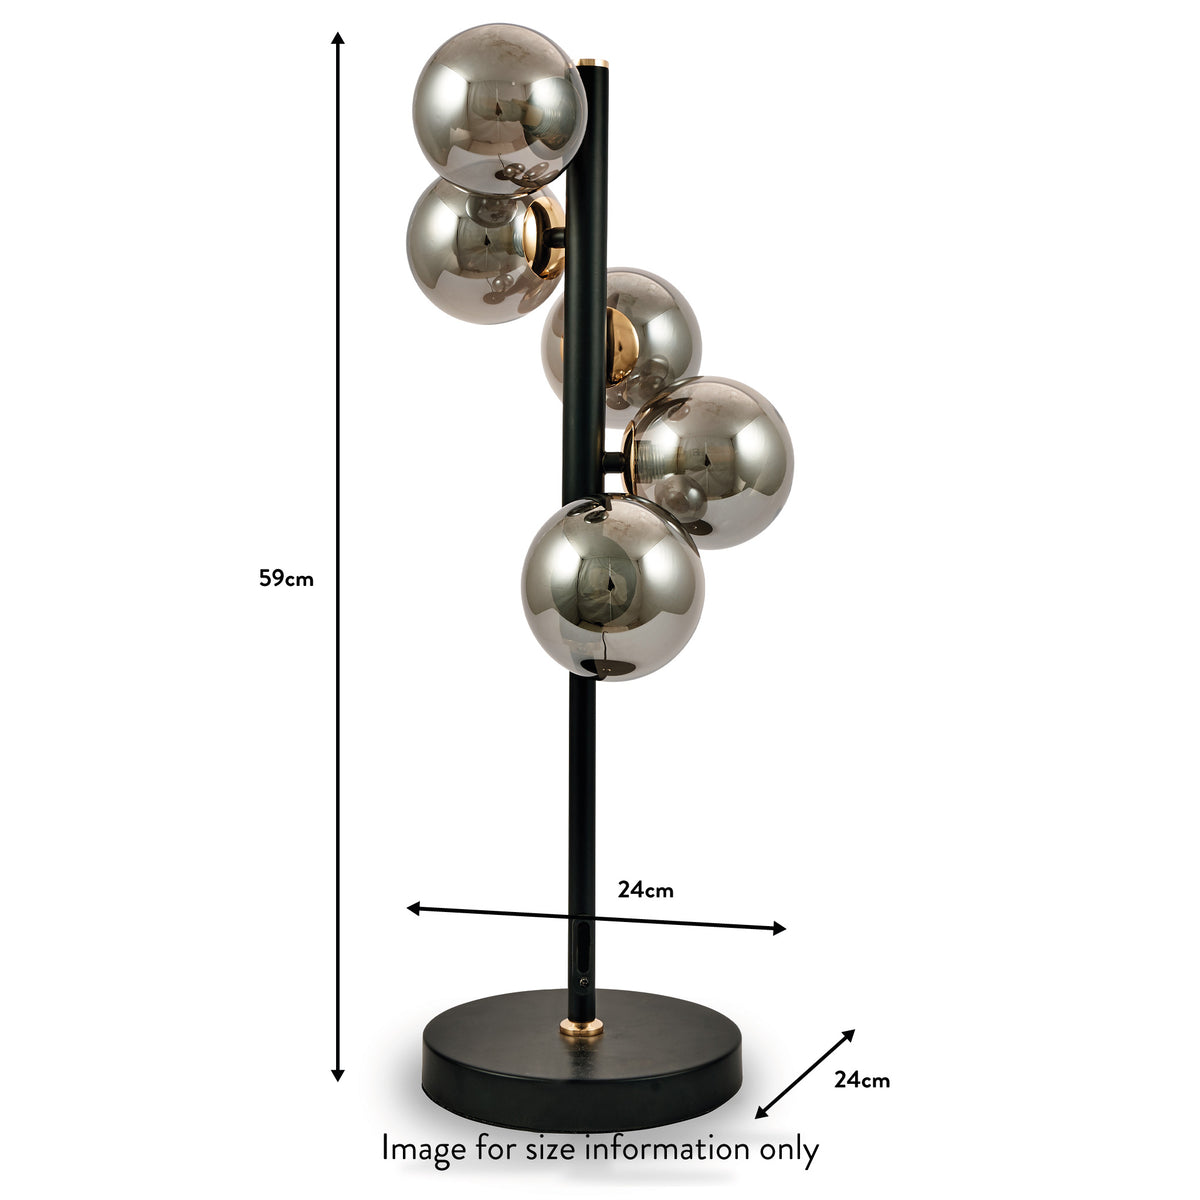 Blair Smoked Glass Ball and Black Metal Table Lamp dimensions